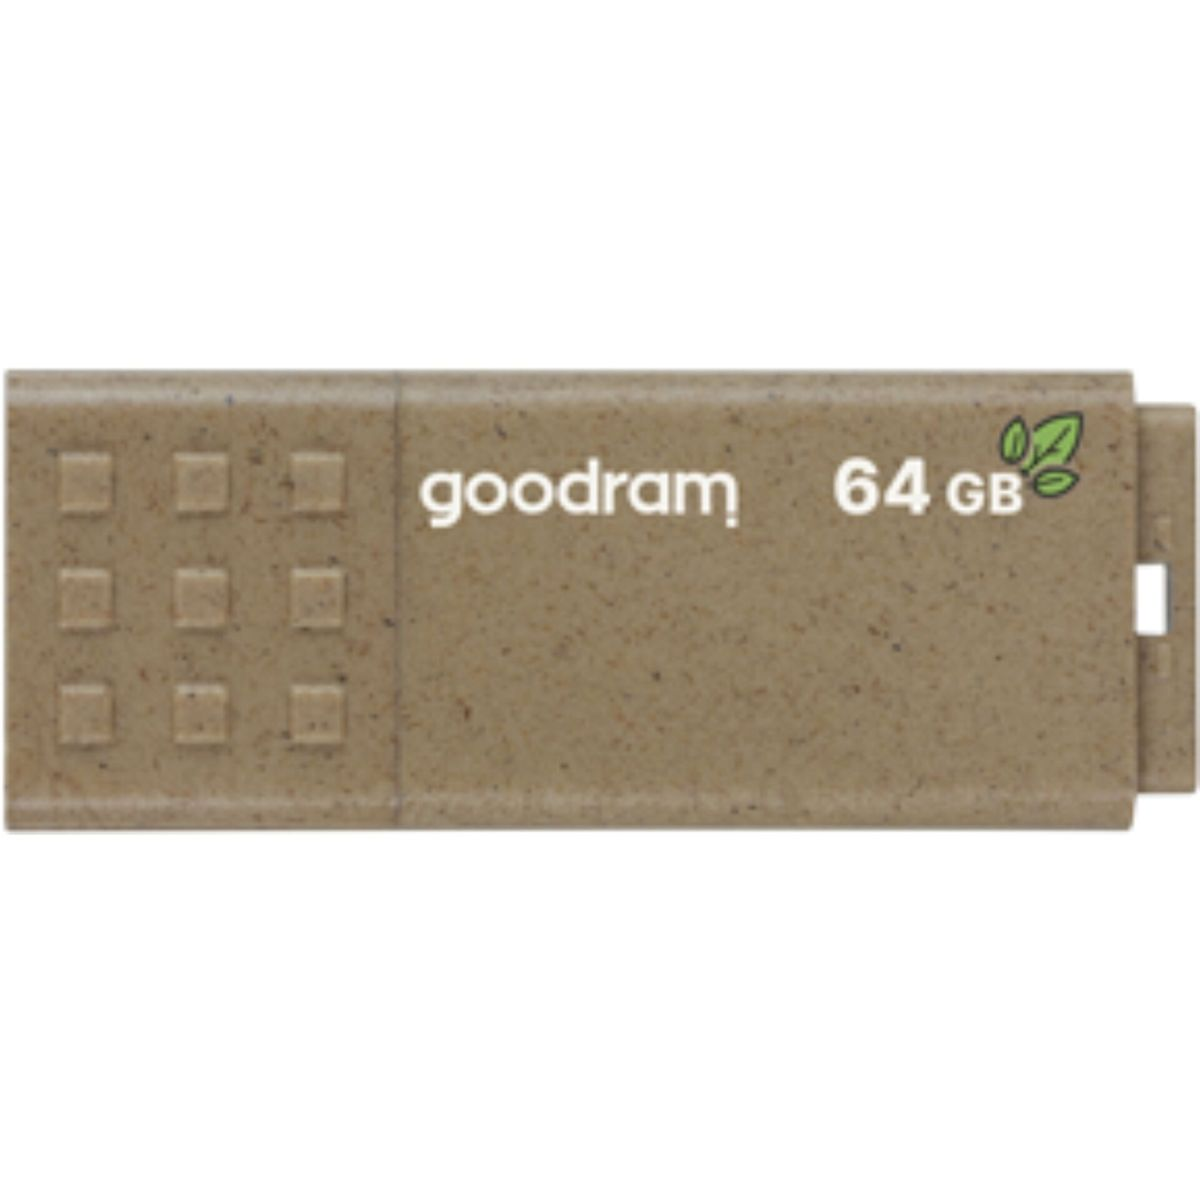 UME3 GOODRAM 64 3.0 (braun, Friendly USB Eco 64GB USB Stick GB)